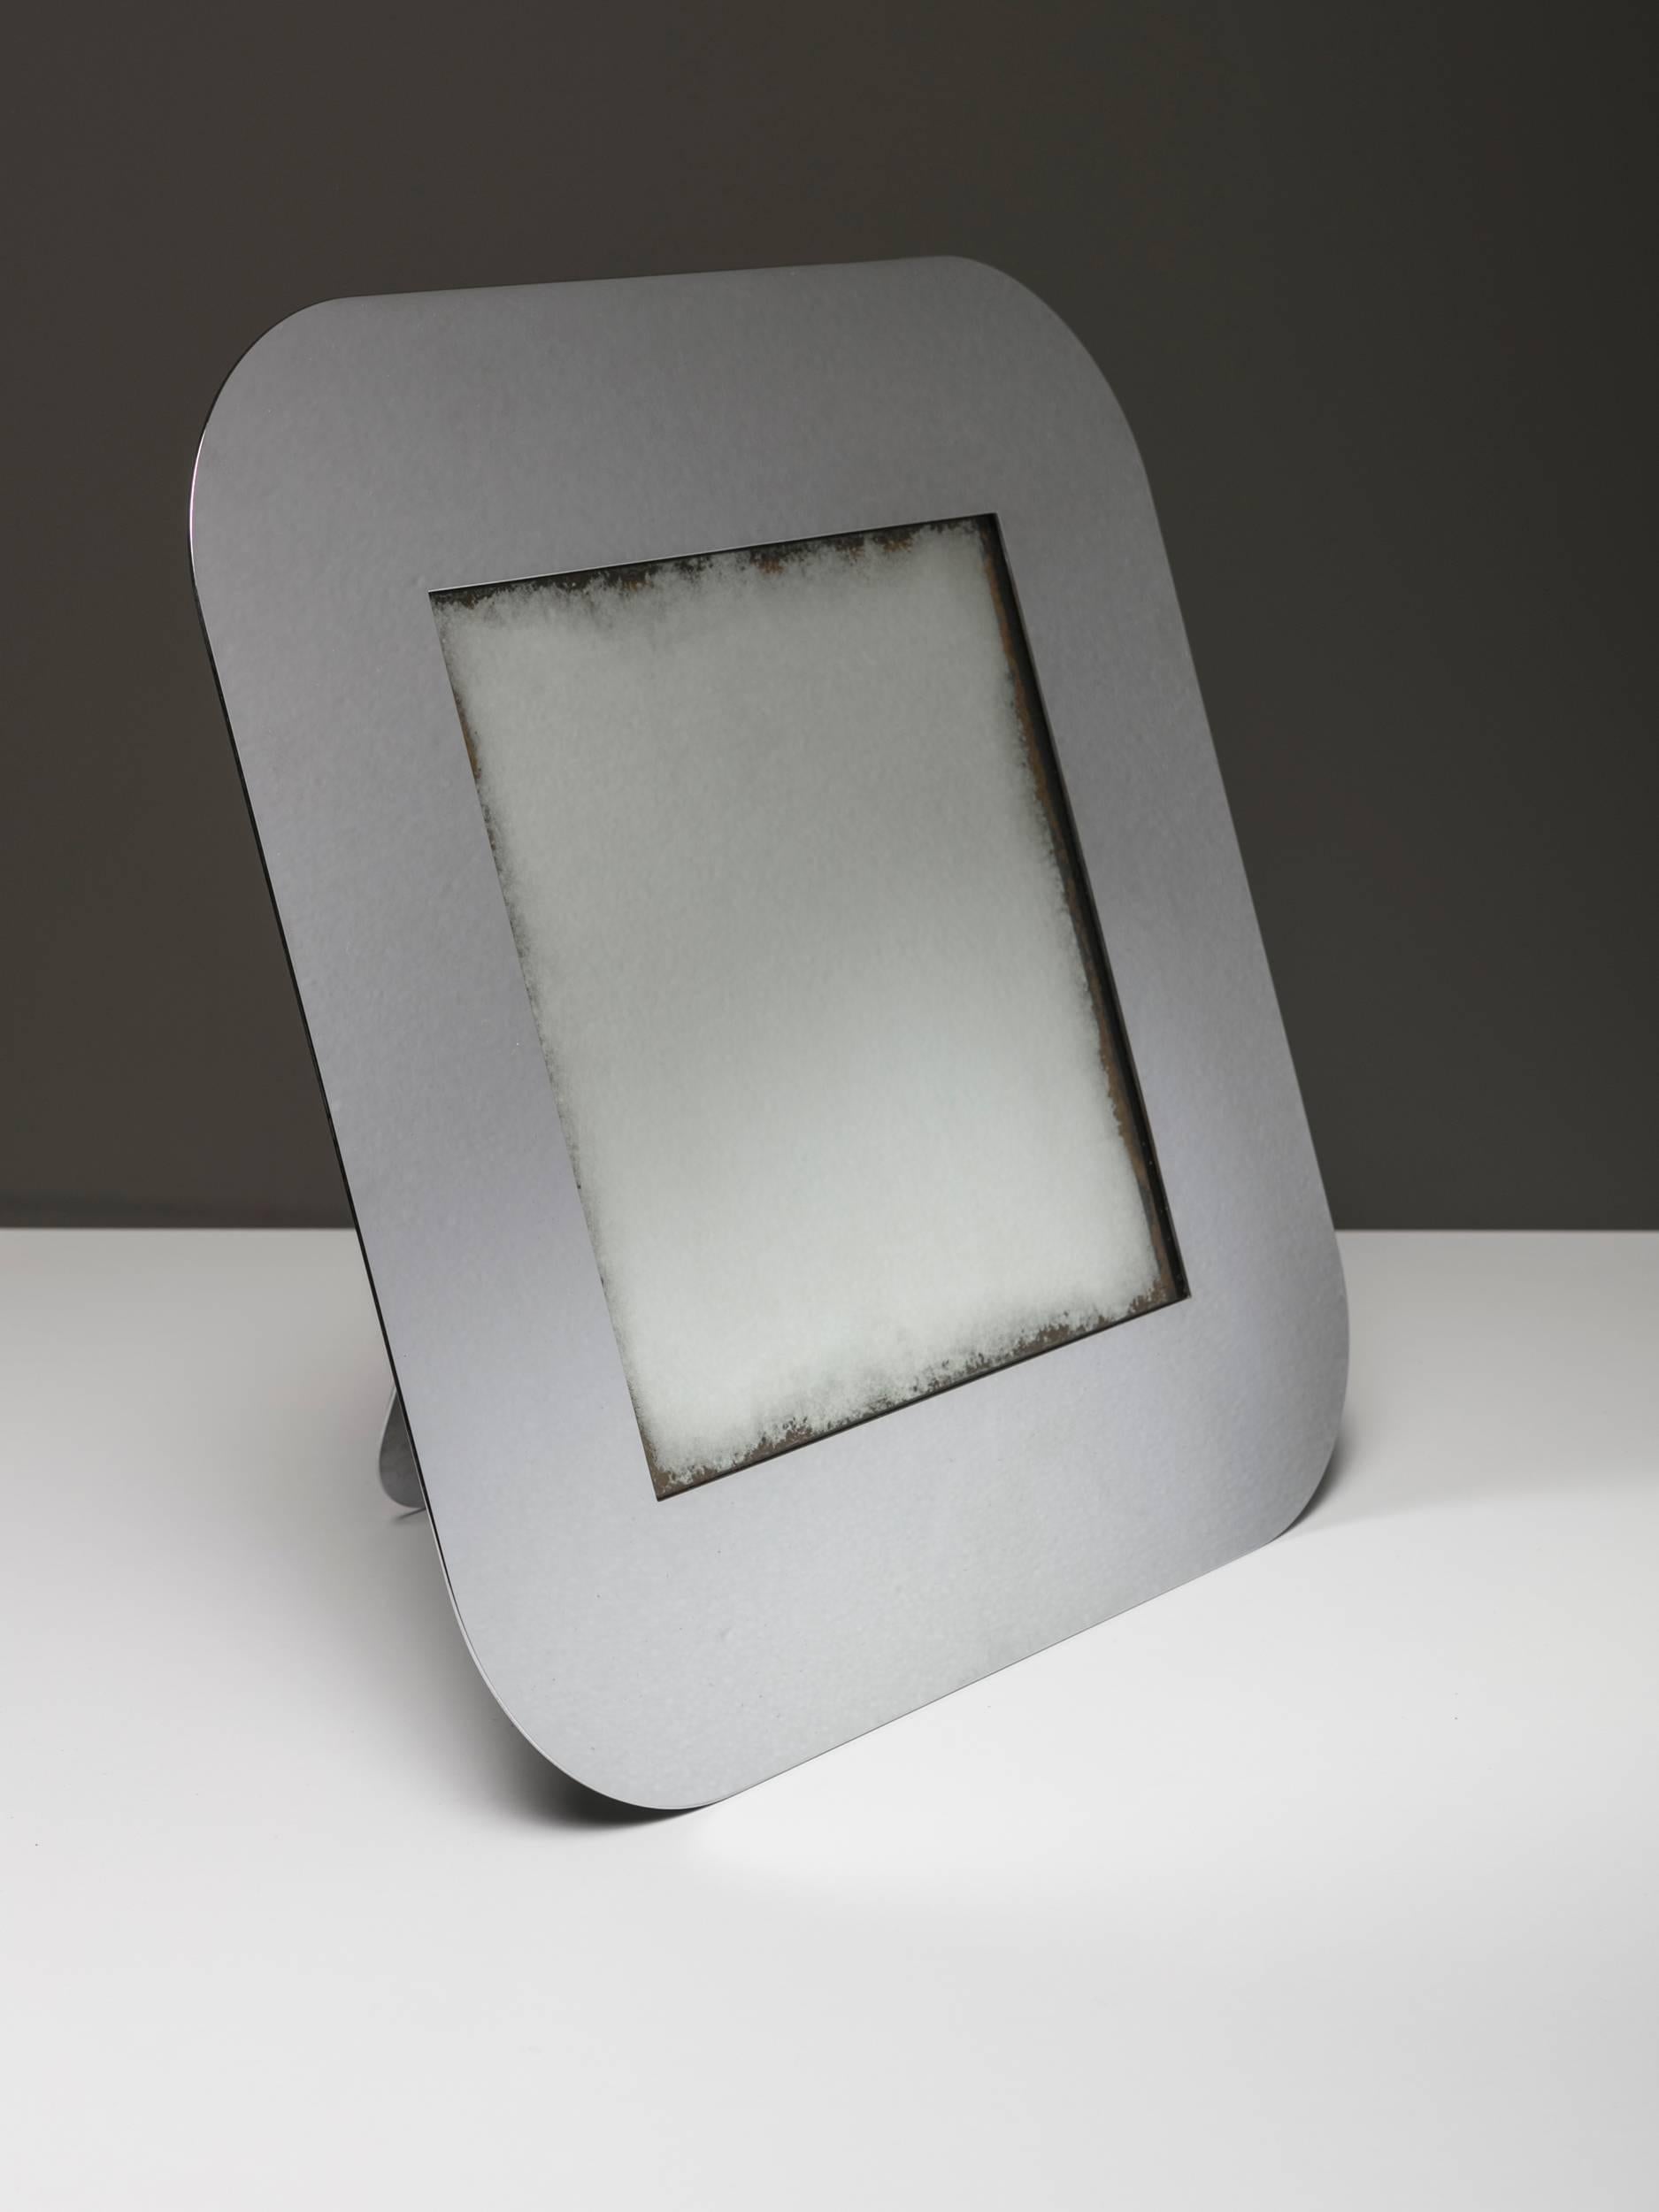 Large table mirror by Sergio Mazza and Giuliana Gramigna for Quattrifolio.
Chrome frame and folding arm.